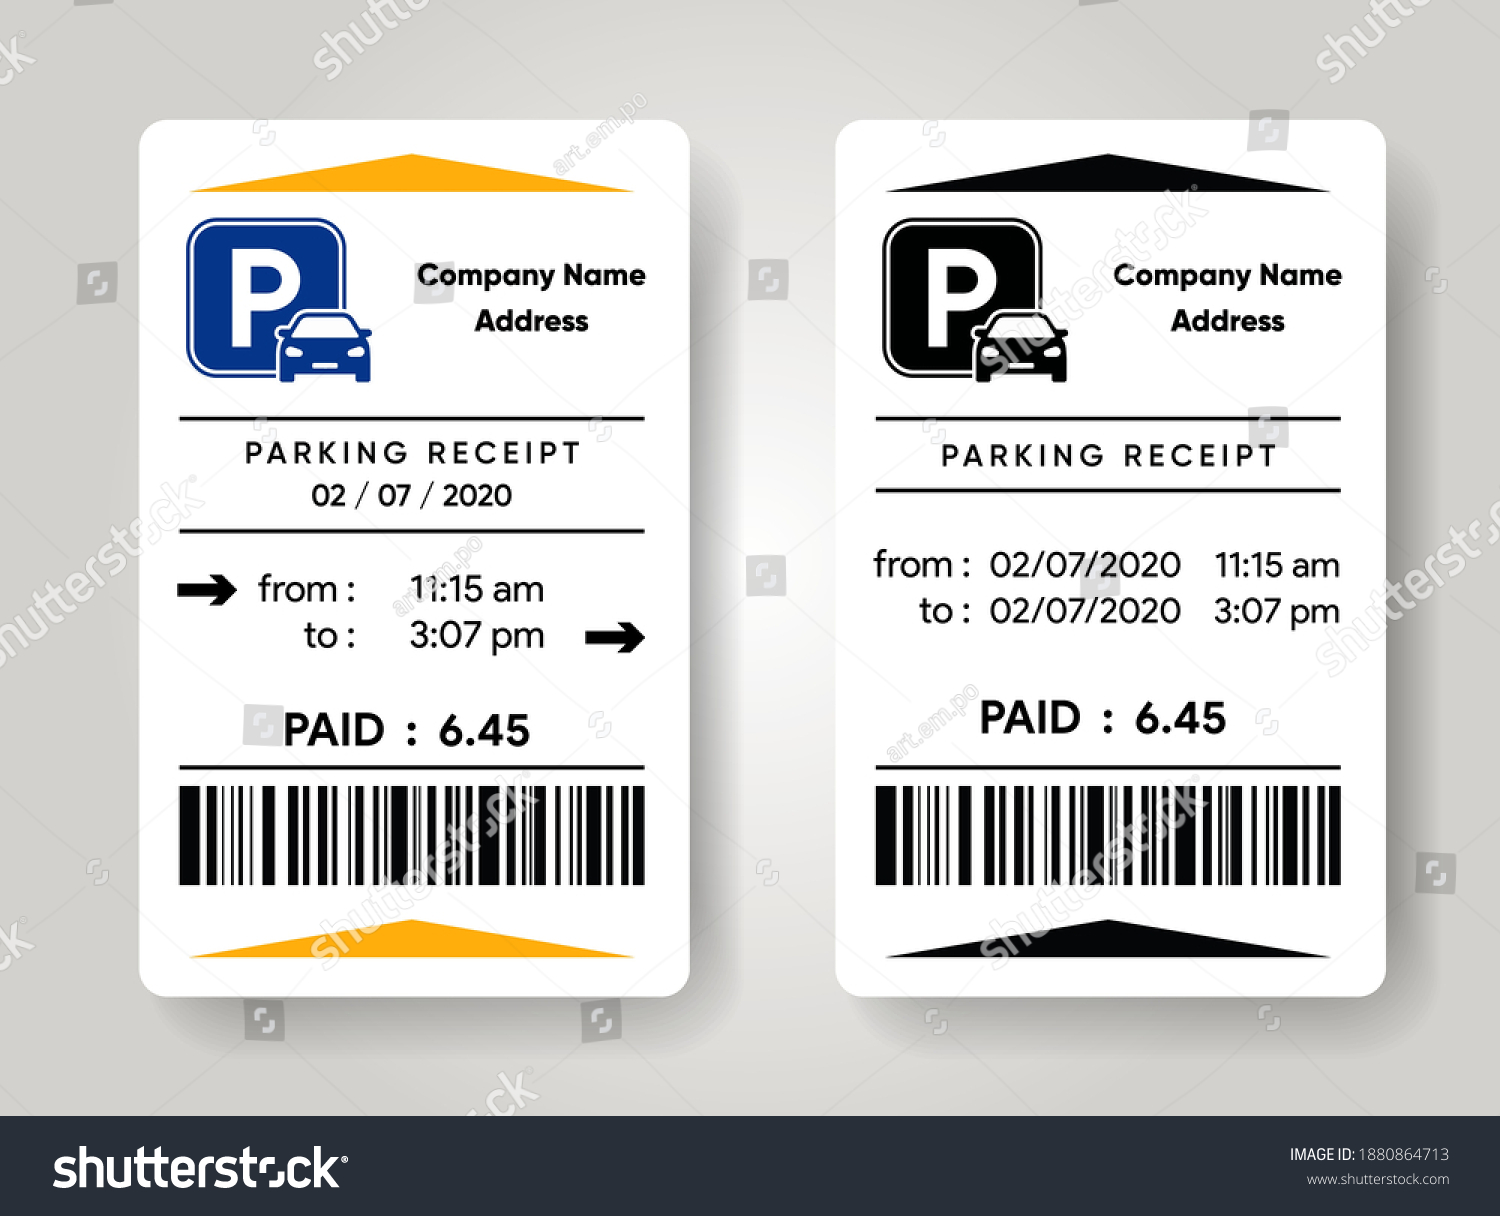 parking-receipt-template-check-parking-meter-stock-vector-royalty-free-1880864713-shutterstock